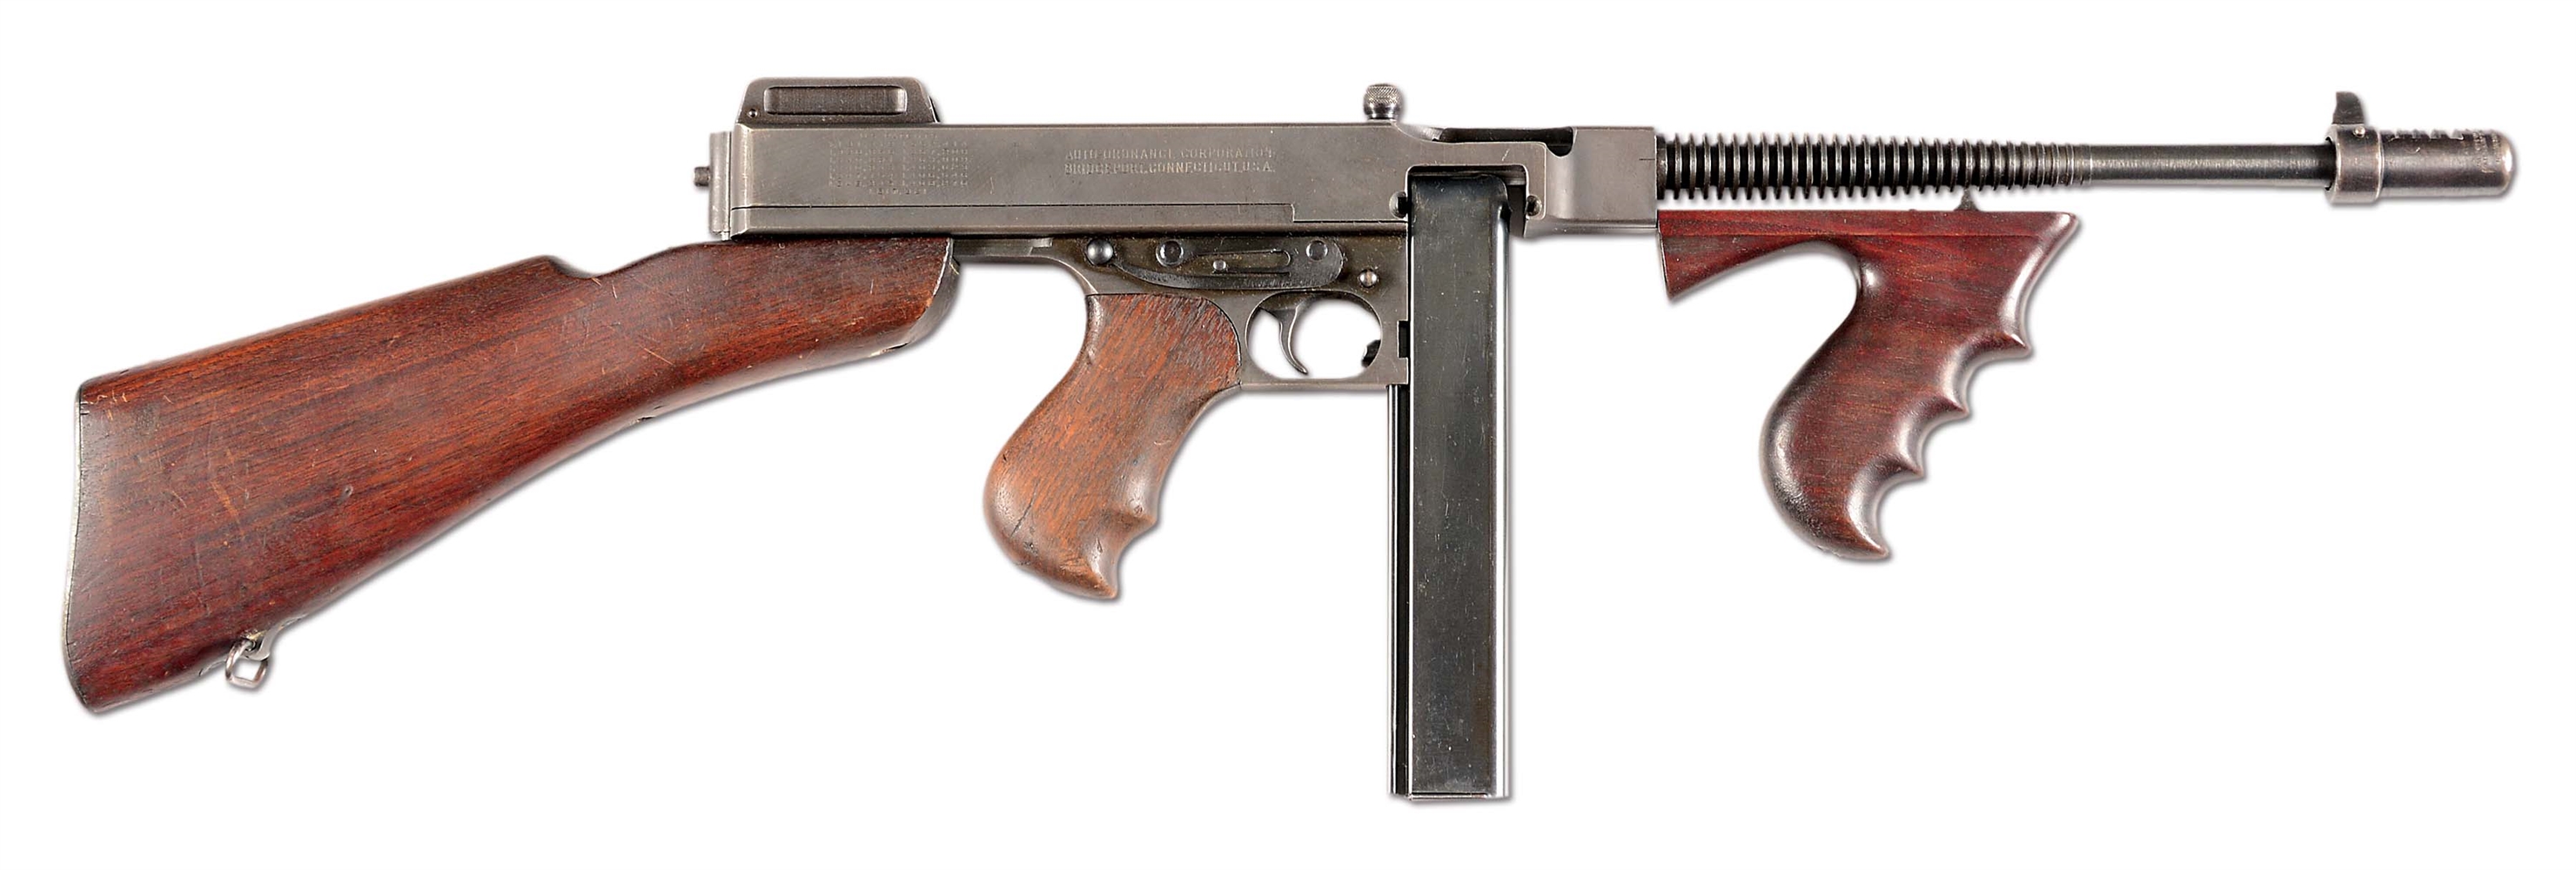 (N) EXTREMELY FINE WWII ERA AUTO ORDNANCE 1928A1 THOMPSON MACHINE GUN (CURIO AND RELIC).